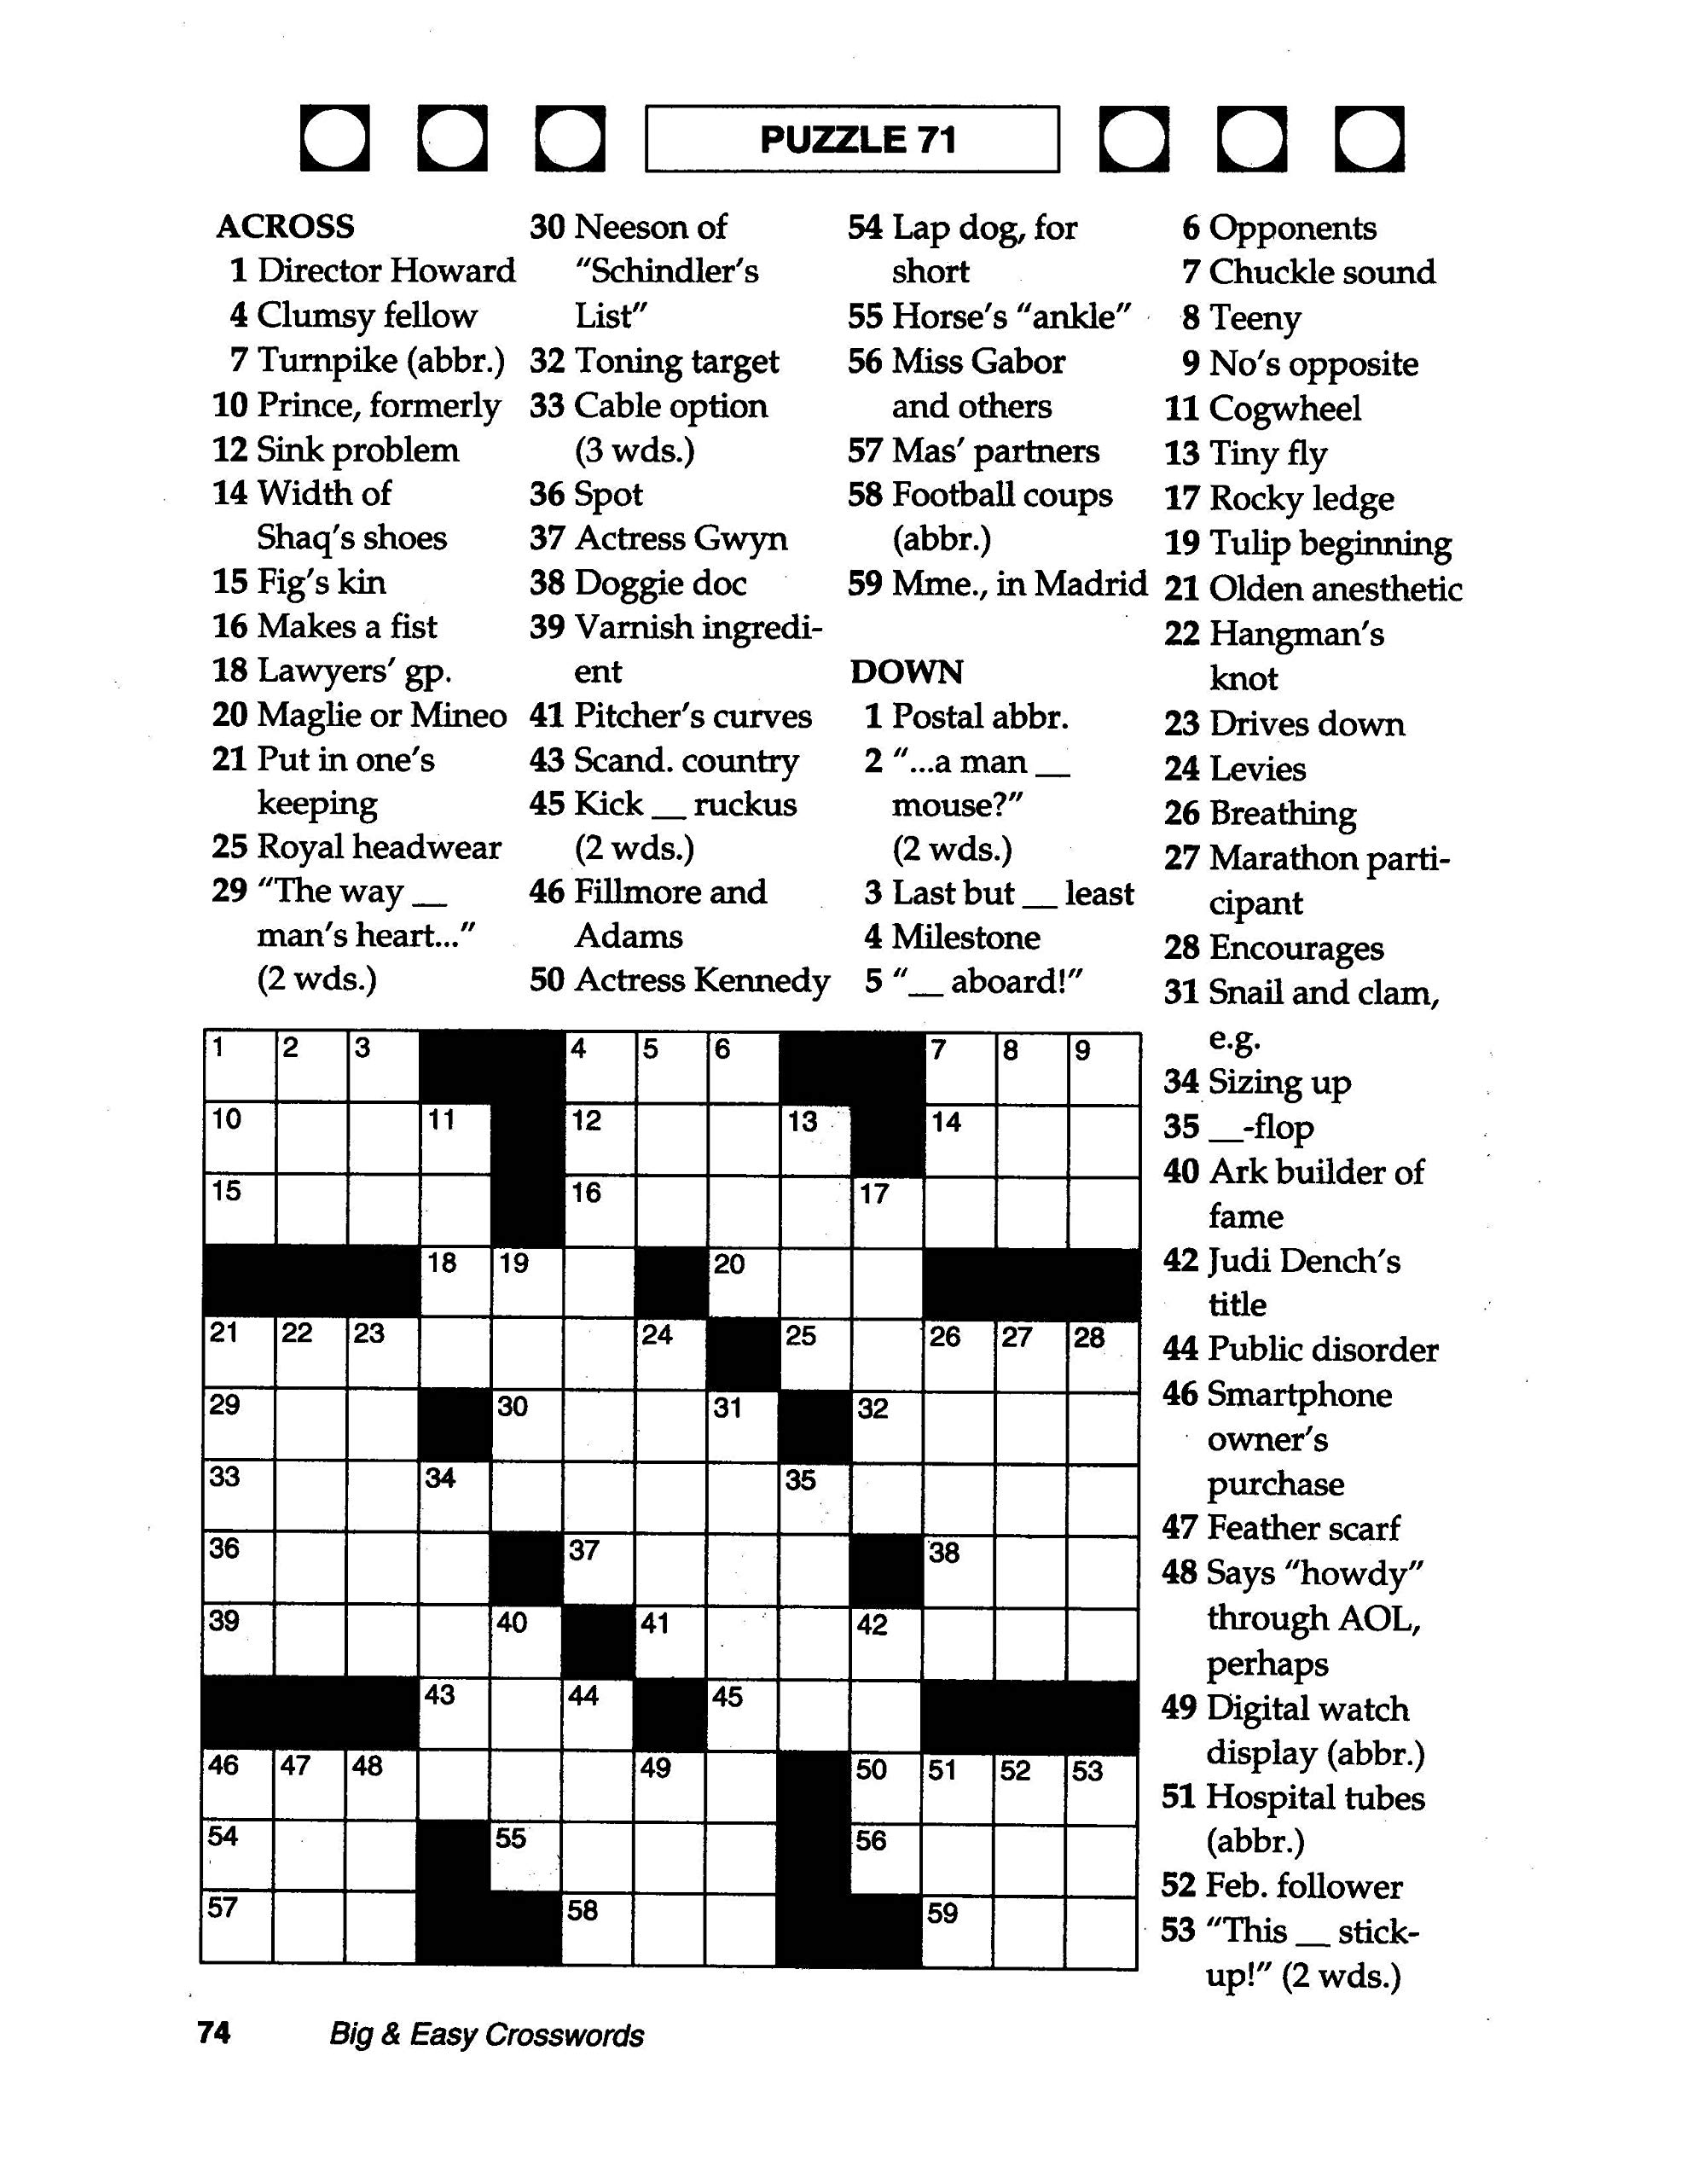 Printable Kappa Crossword Puzzles